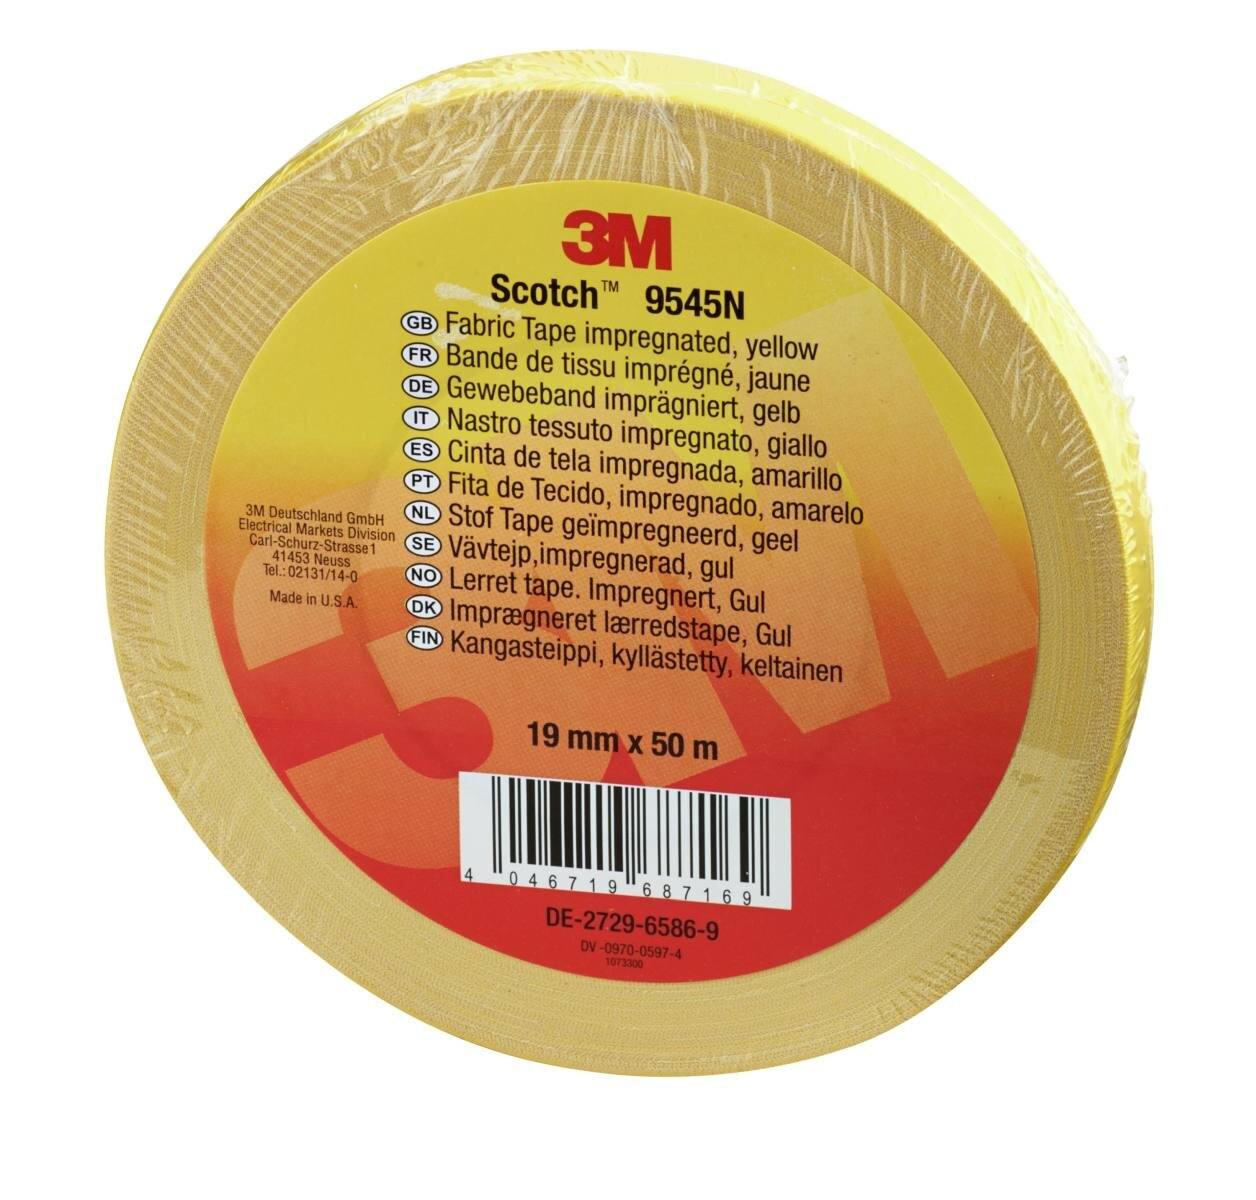 3M Scotch 9545N Impregnated fabric tape, yellow, 19 mm x 50 m, 0.3 mm